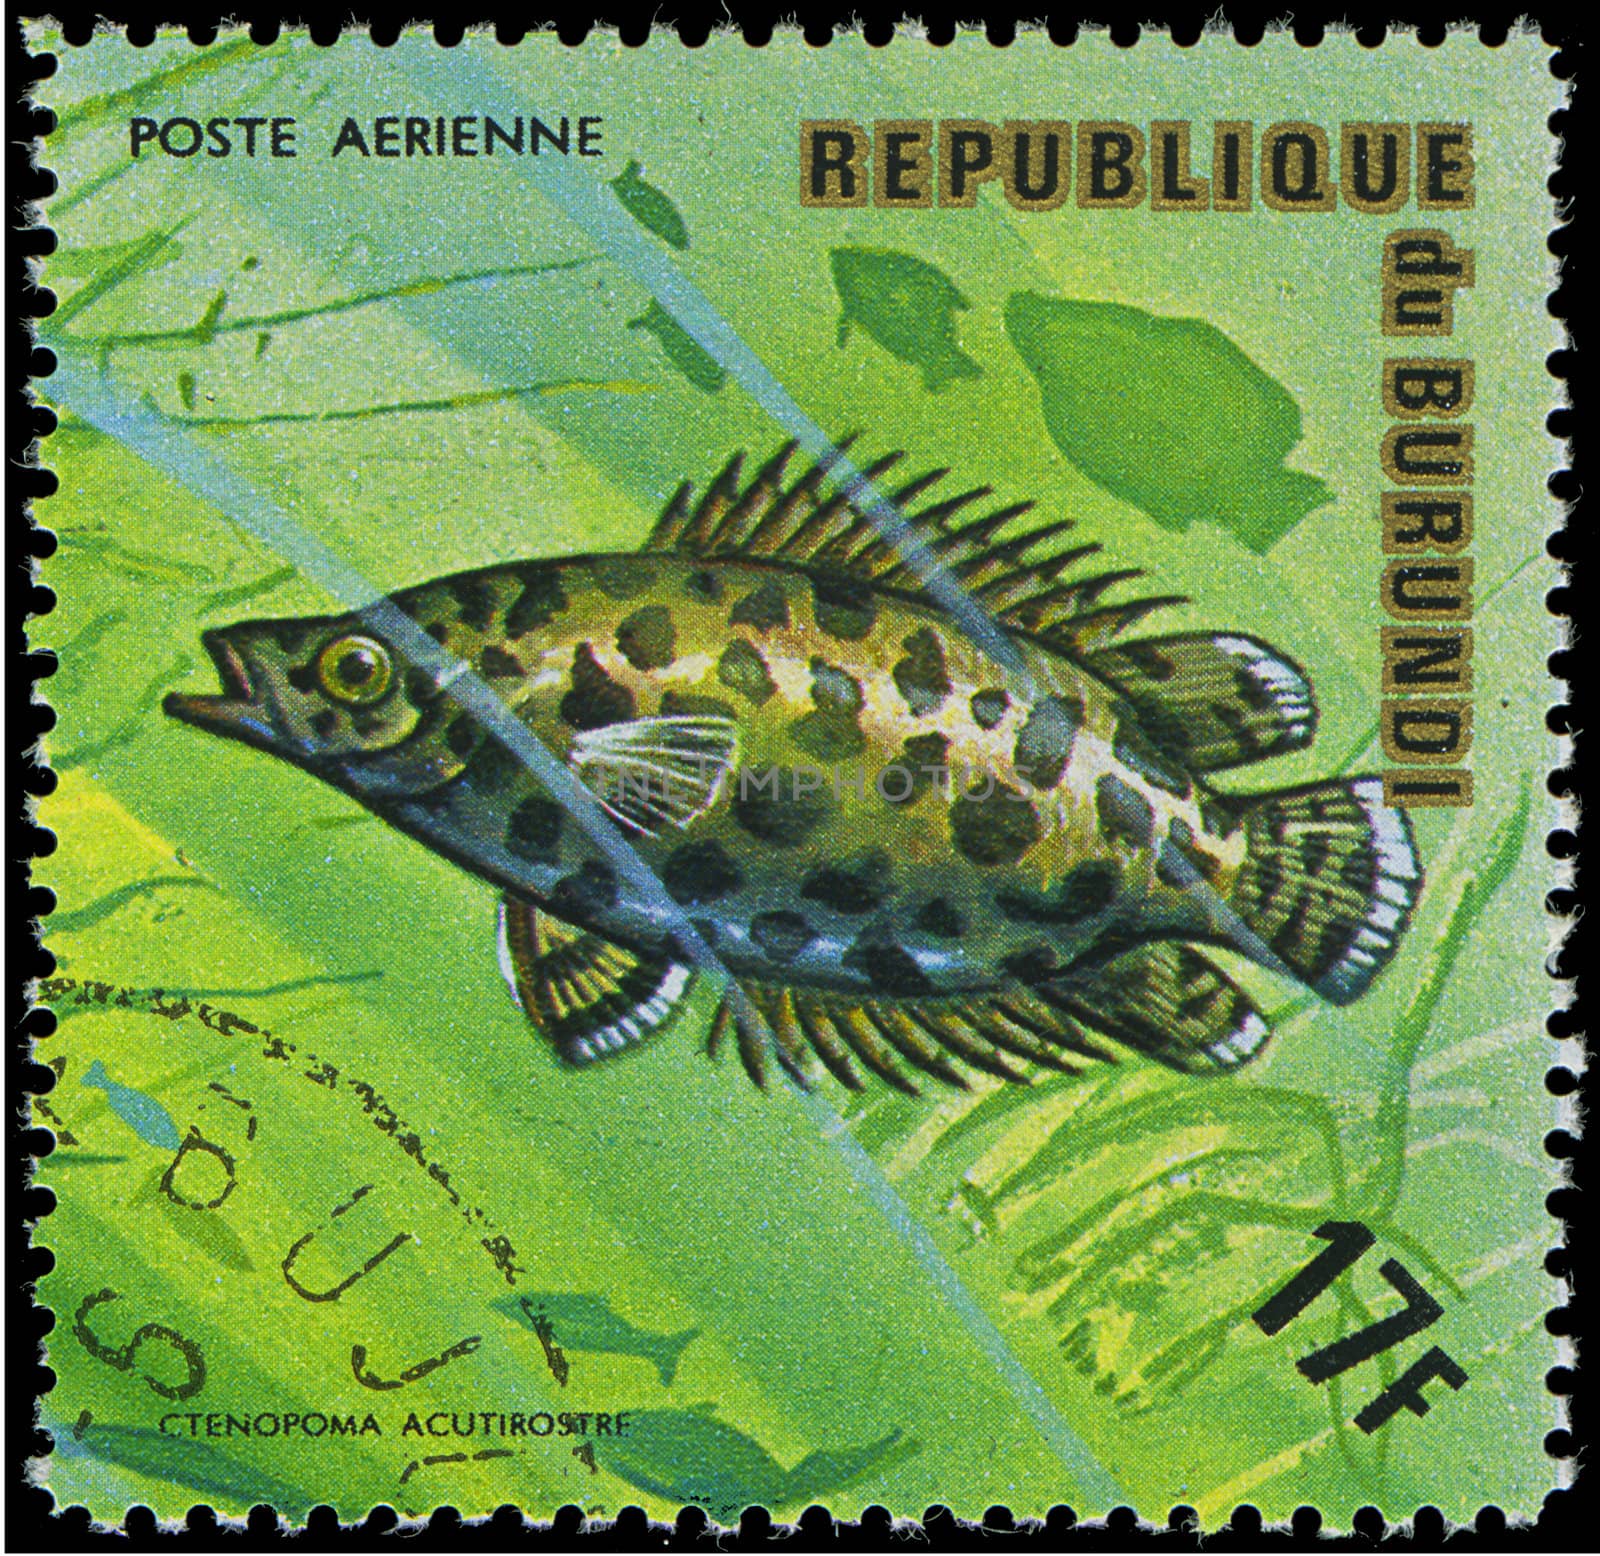 Republic of Burundi, - CIRCA 1975: A stamp printed by Burundi shows the fish Ctenopoma acutirostre, circa 1975